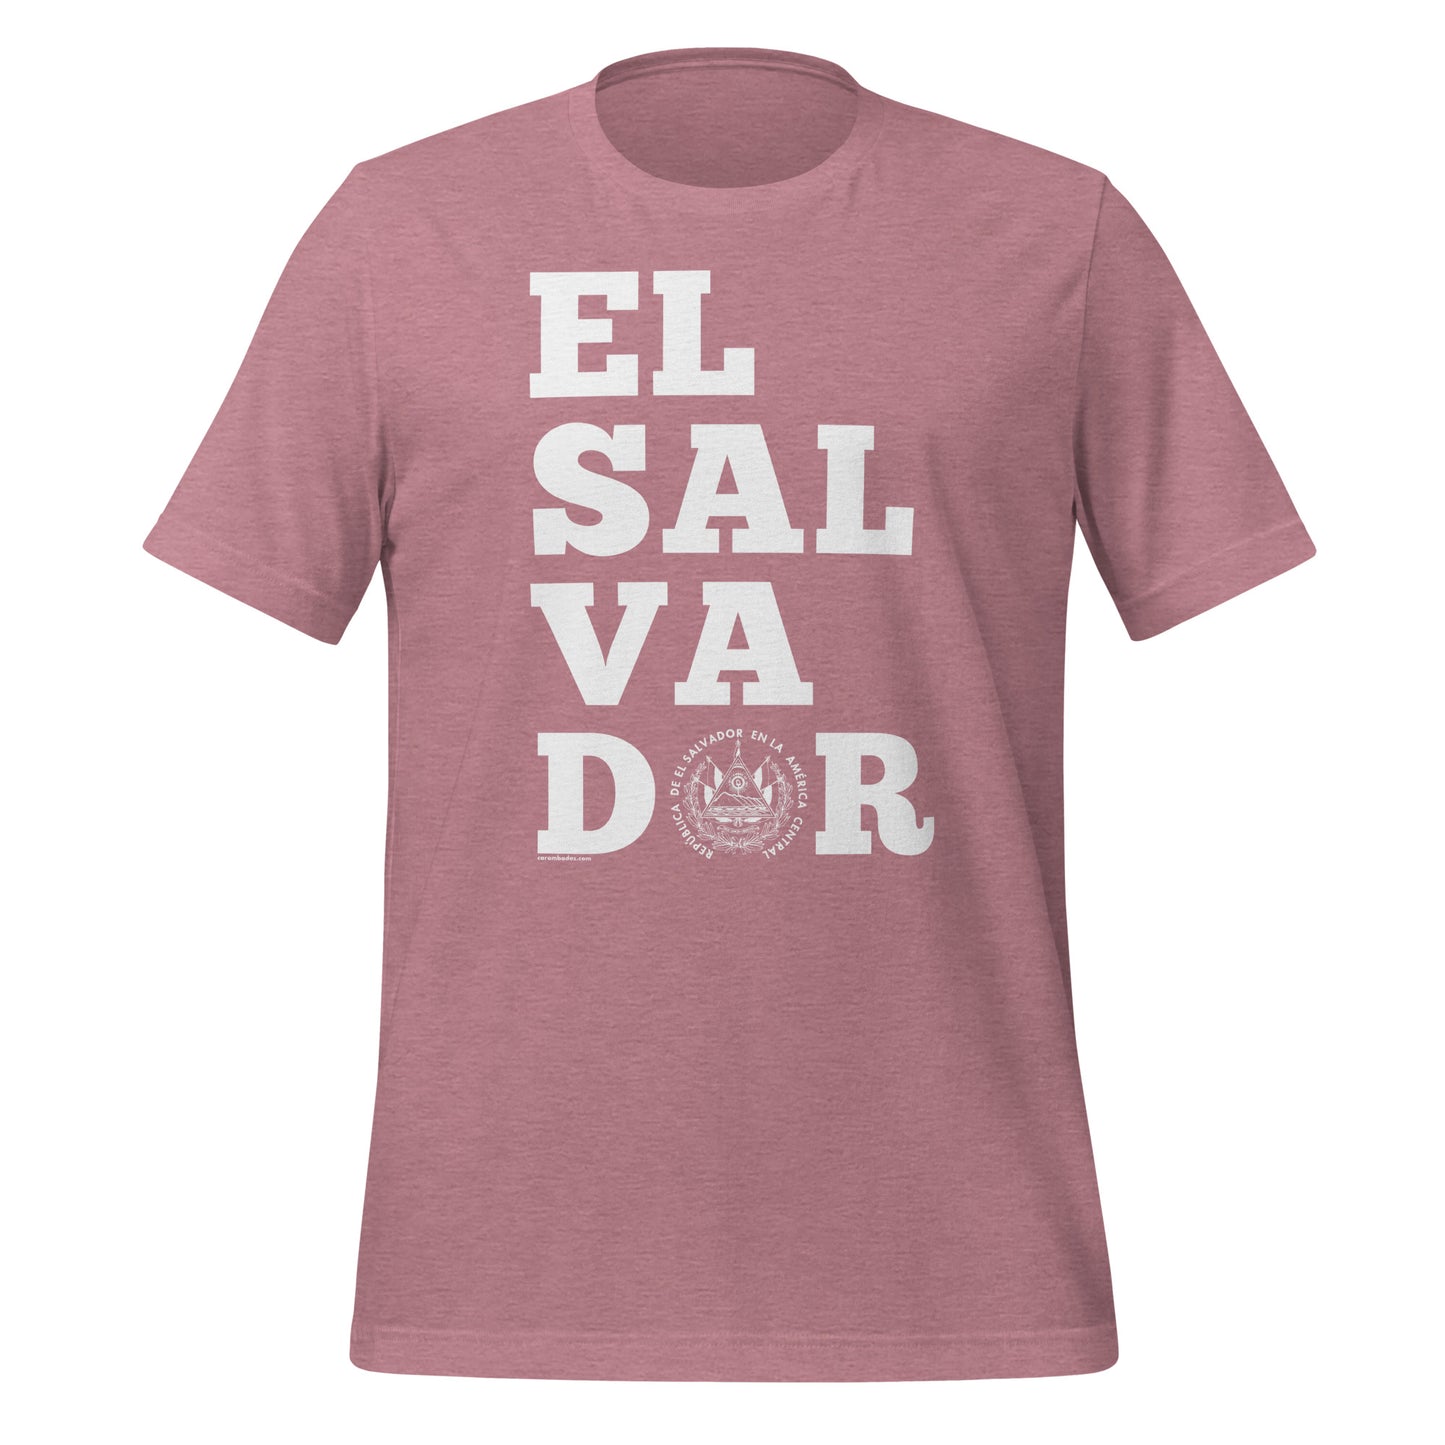 El Sal Va Dor Shirt Unisex T-shirt